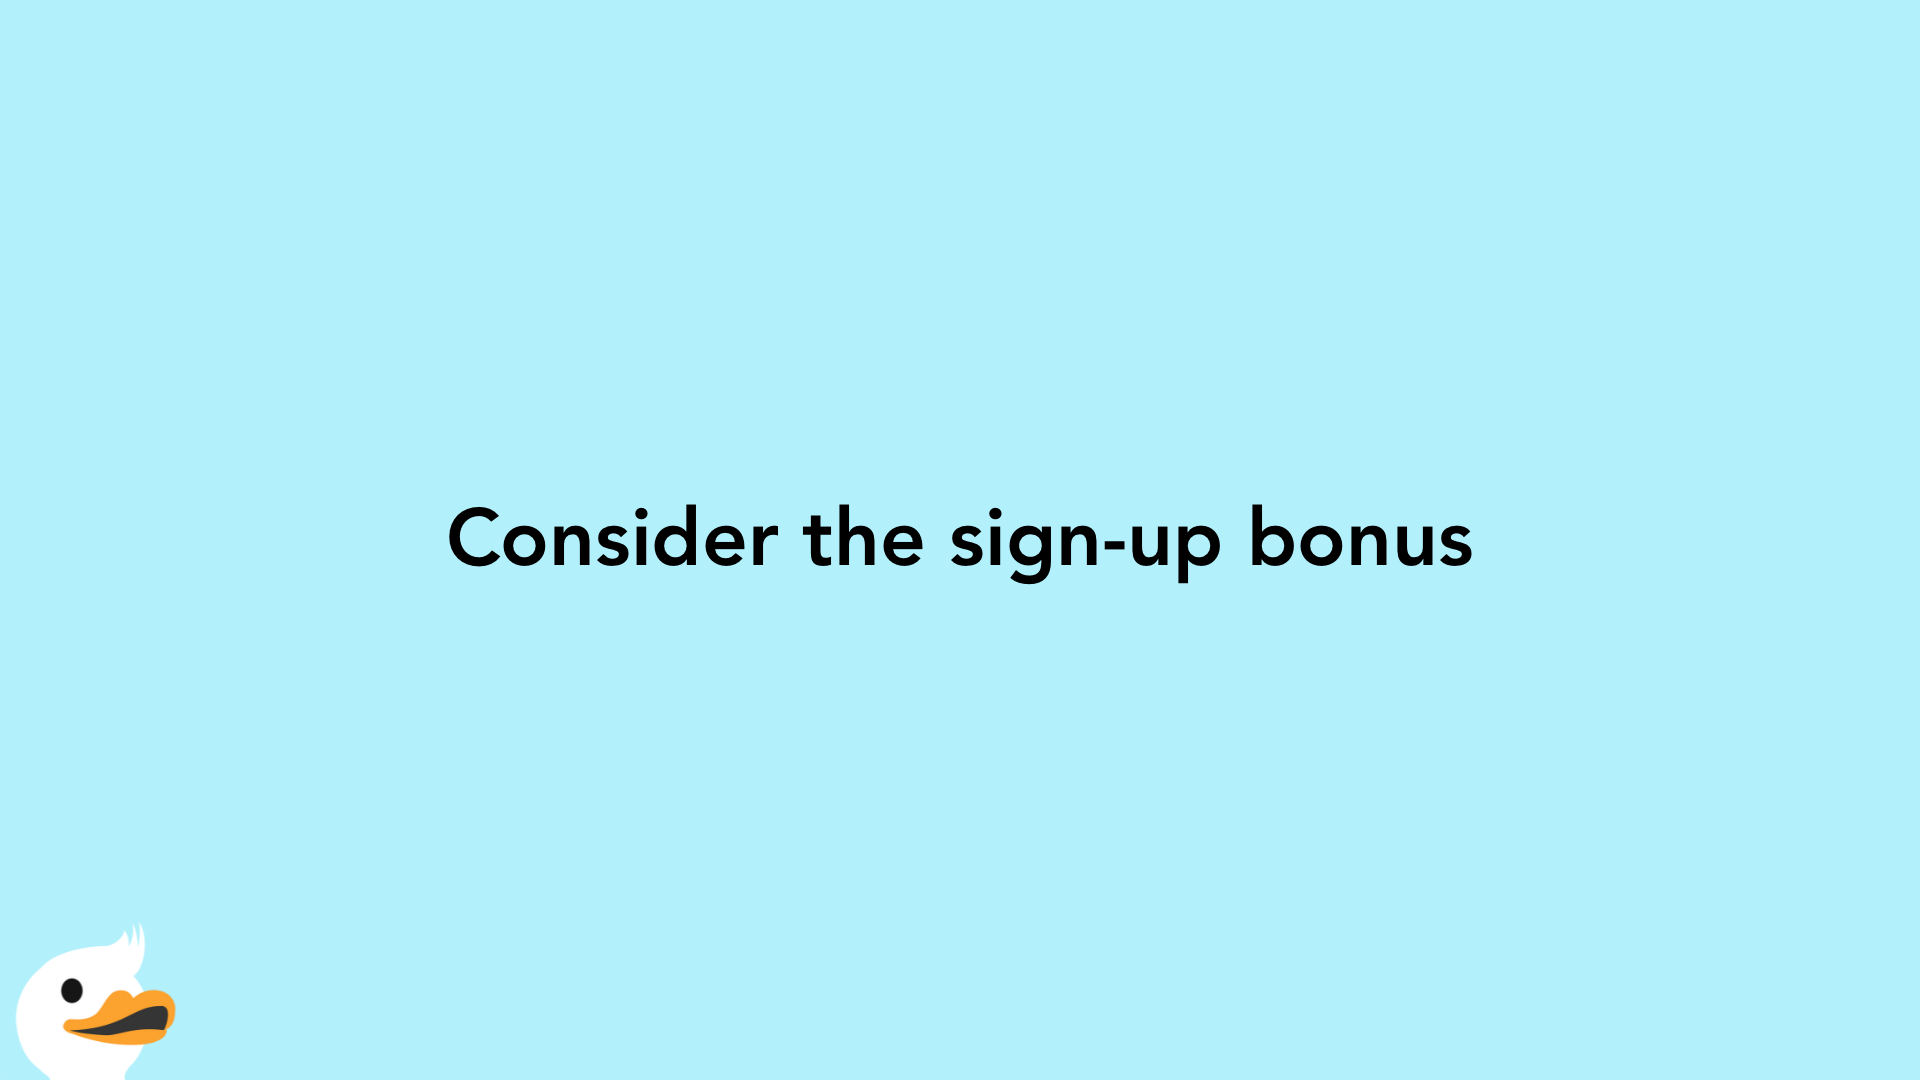 Consider the sign-up bonus